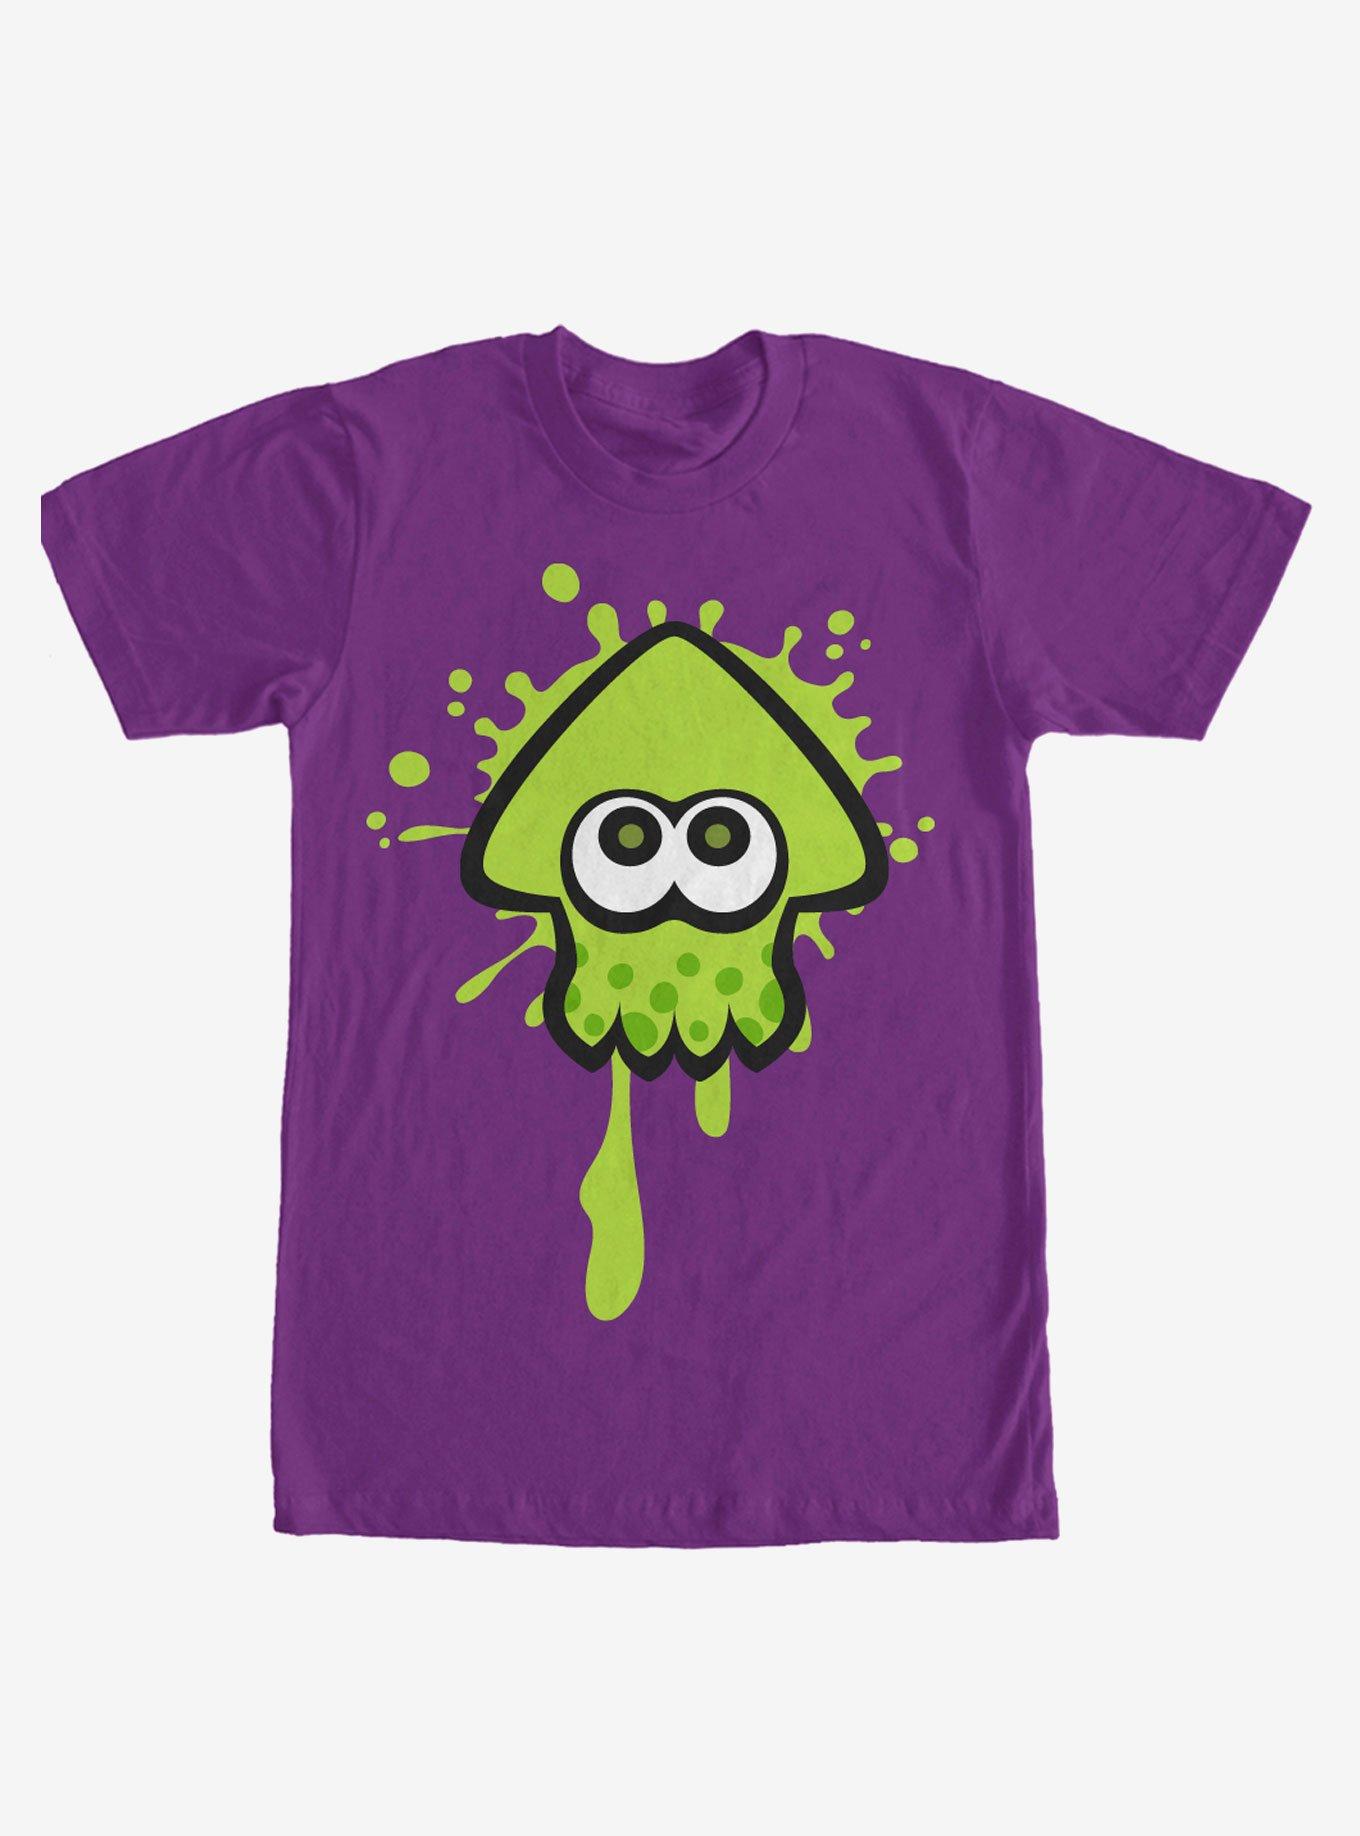 Nintendo Splatoon Lime Green Inkling Squid T-Shirt, PURPLE, hi-res